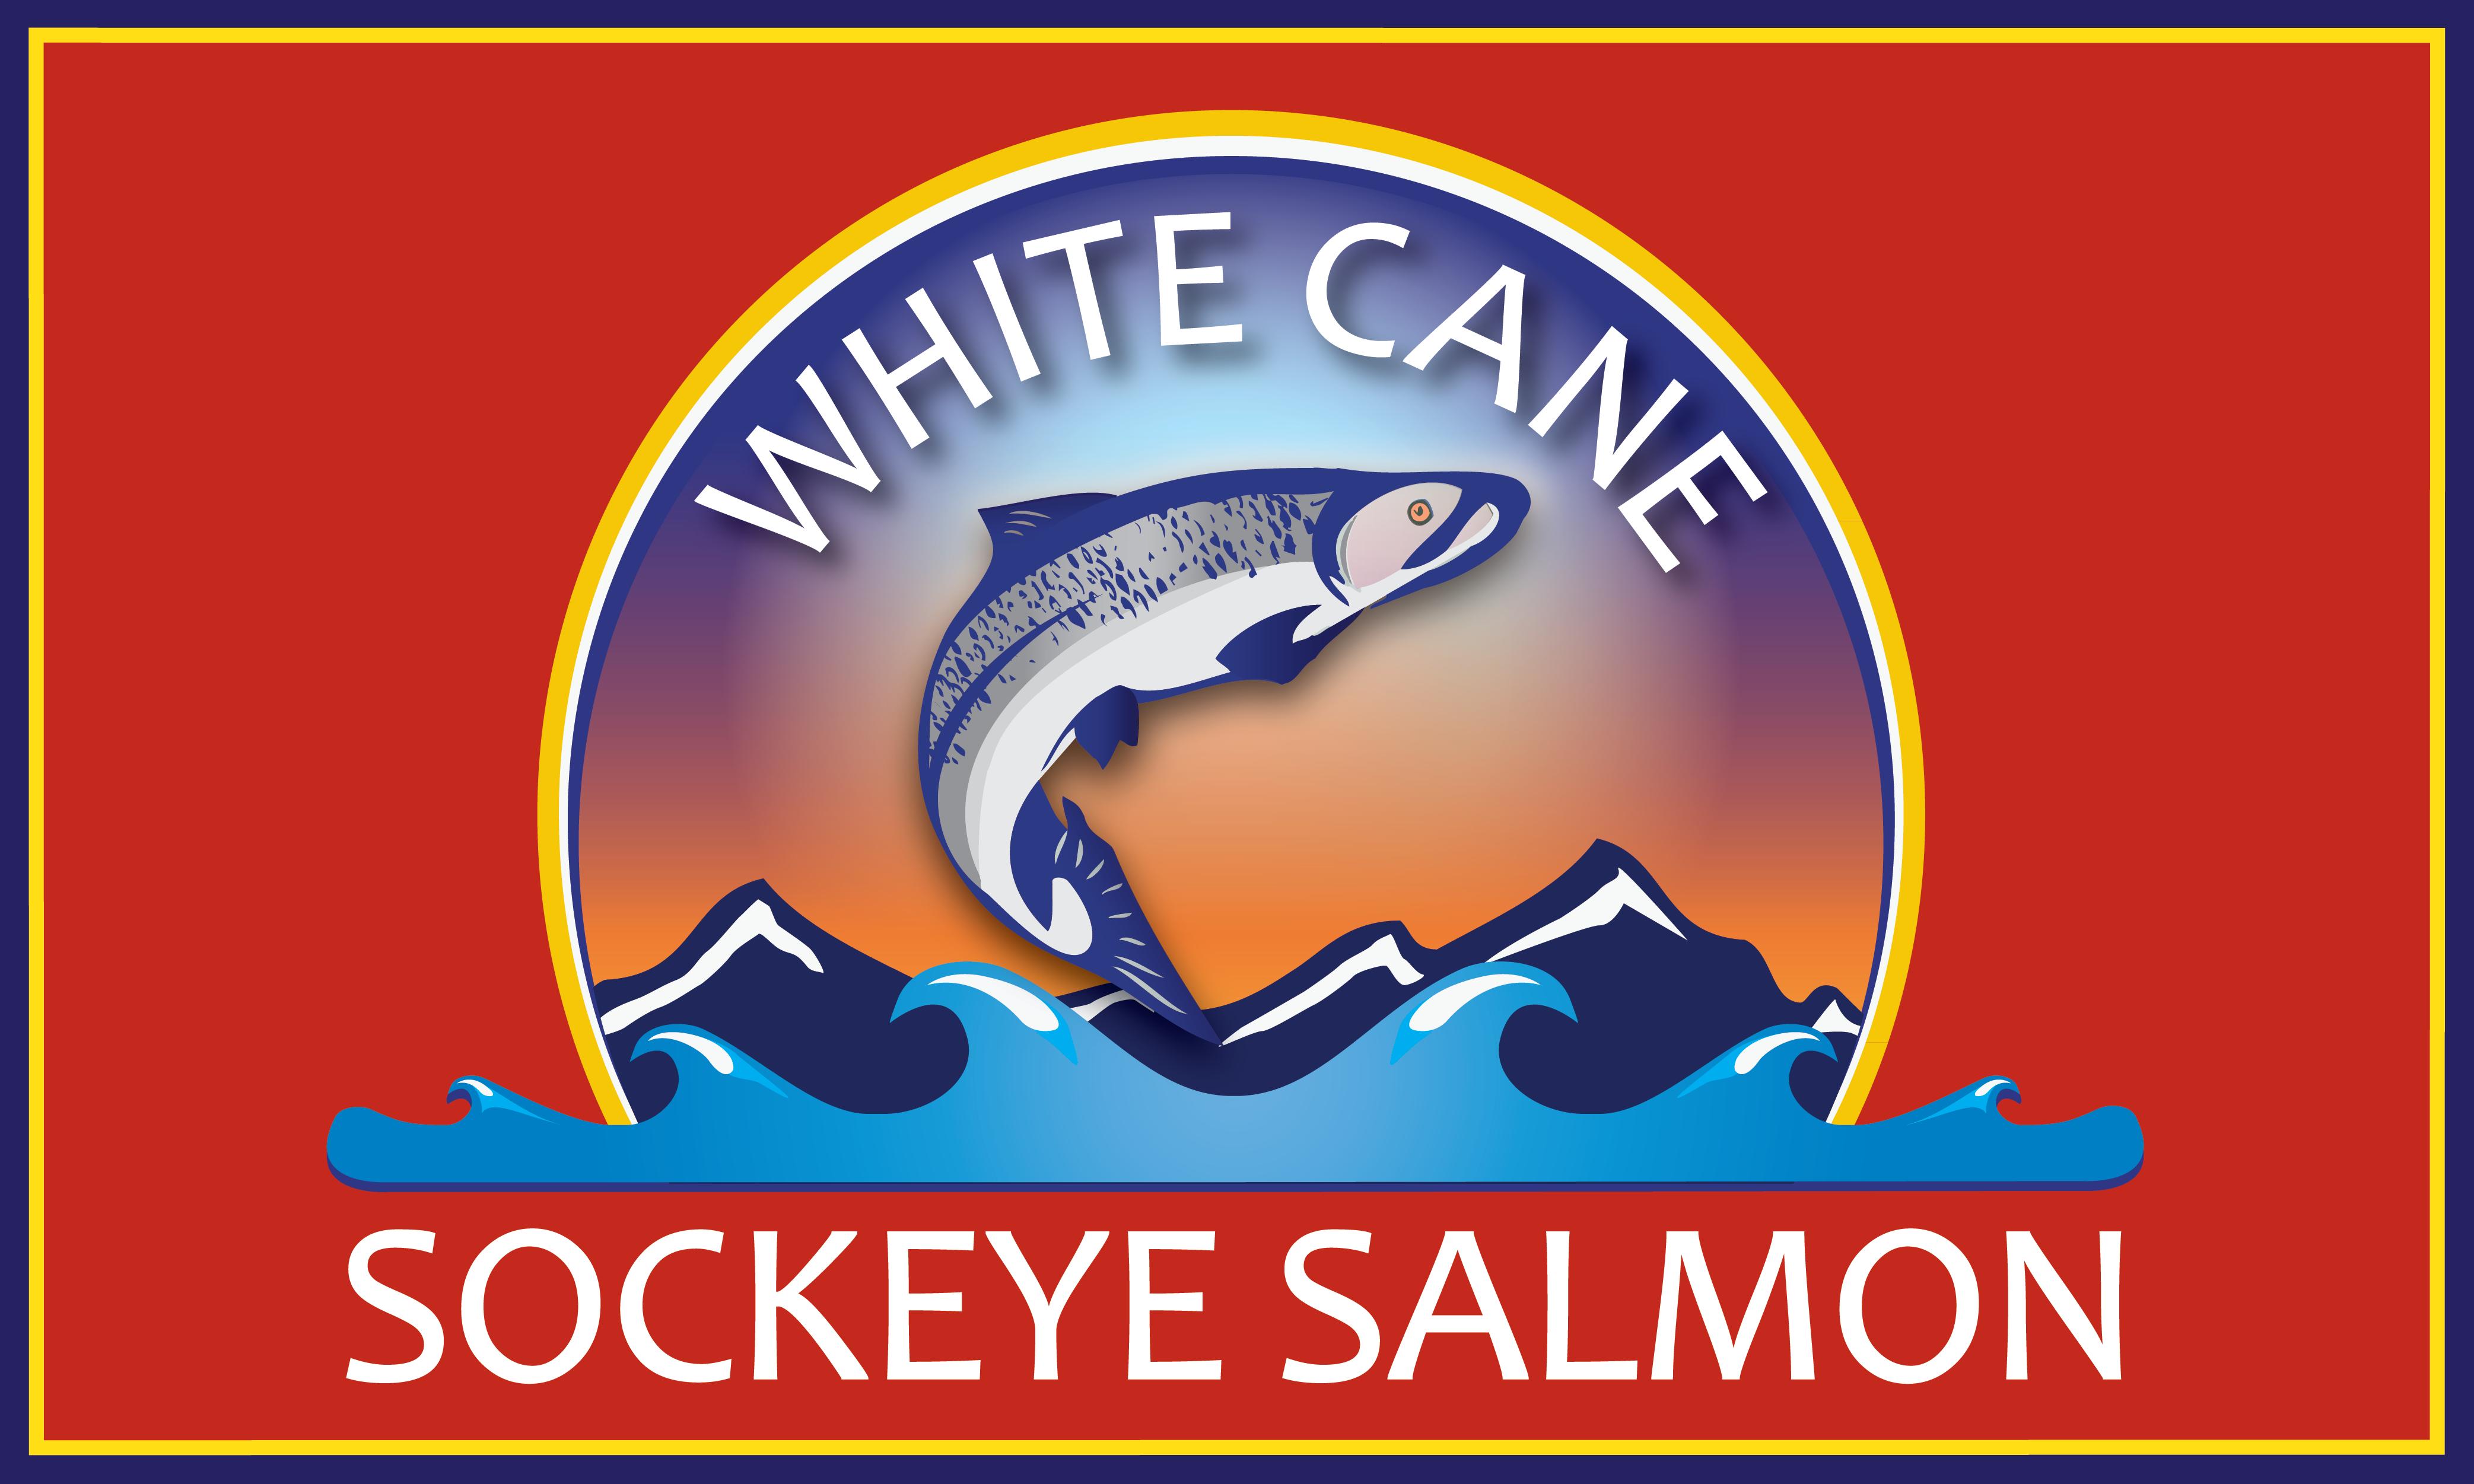 White Cane Sockeye Salmon / Heirloom Farmers Markets